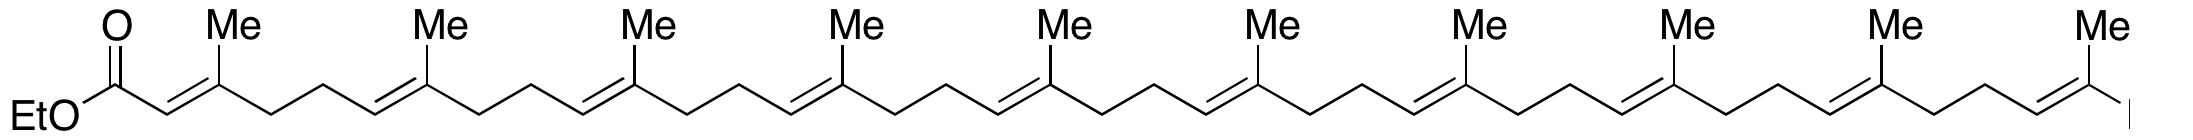 (all-E)-3,7,11,15,19,23,27,31,35,39-Decamethyl-2,6,10,14,18,22,26,30,34,38-tetracontadecaenoic Acid Ethyl Ester 